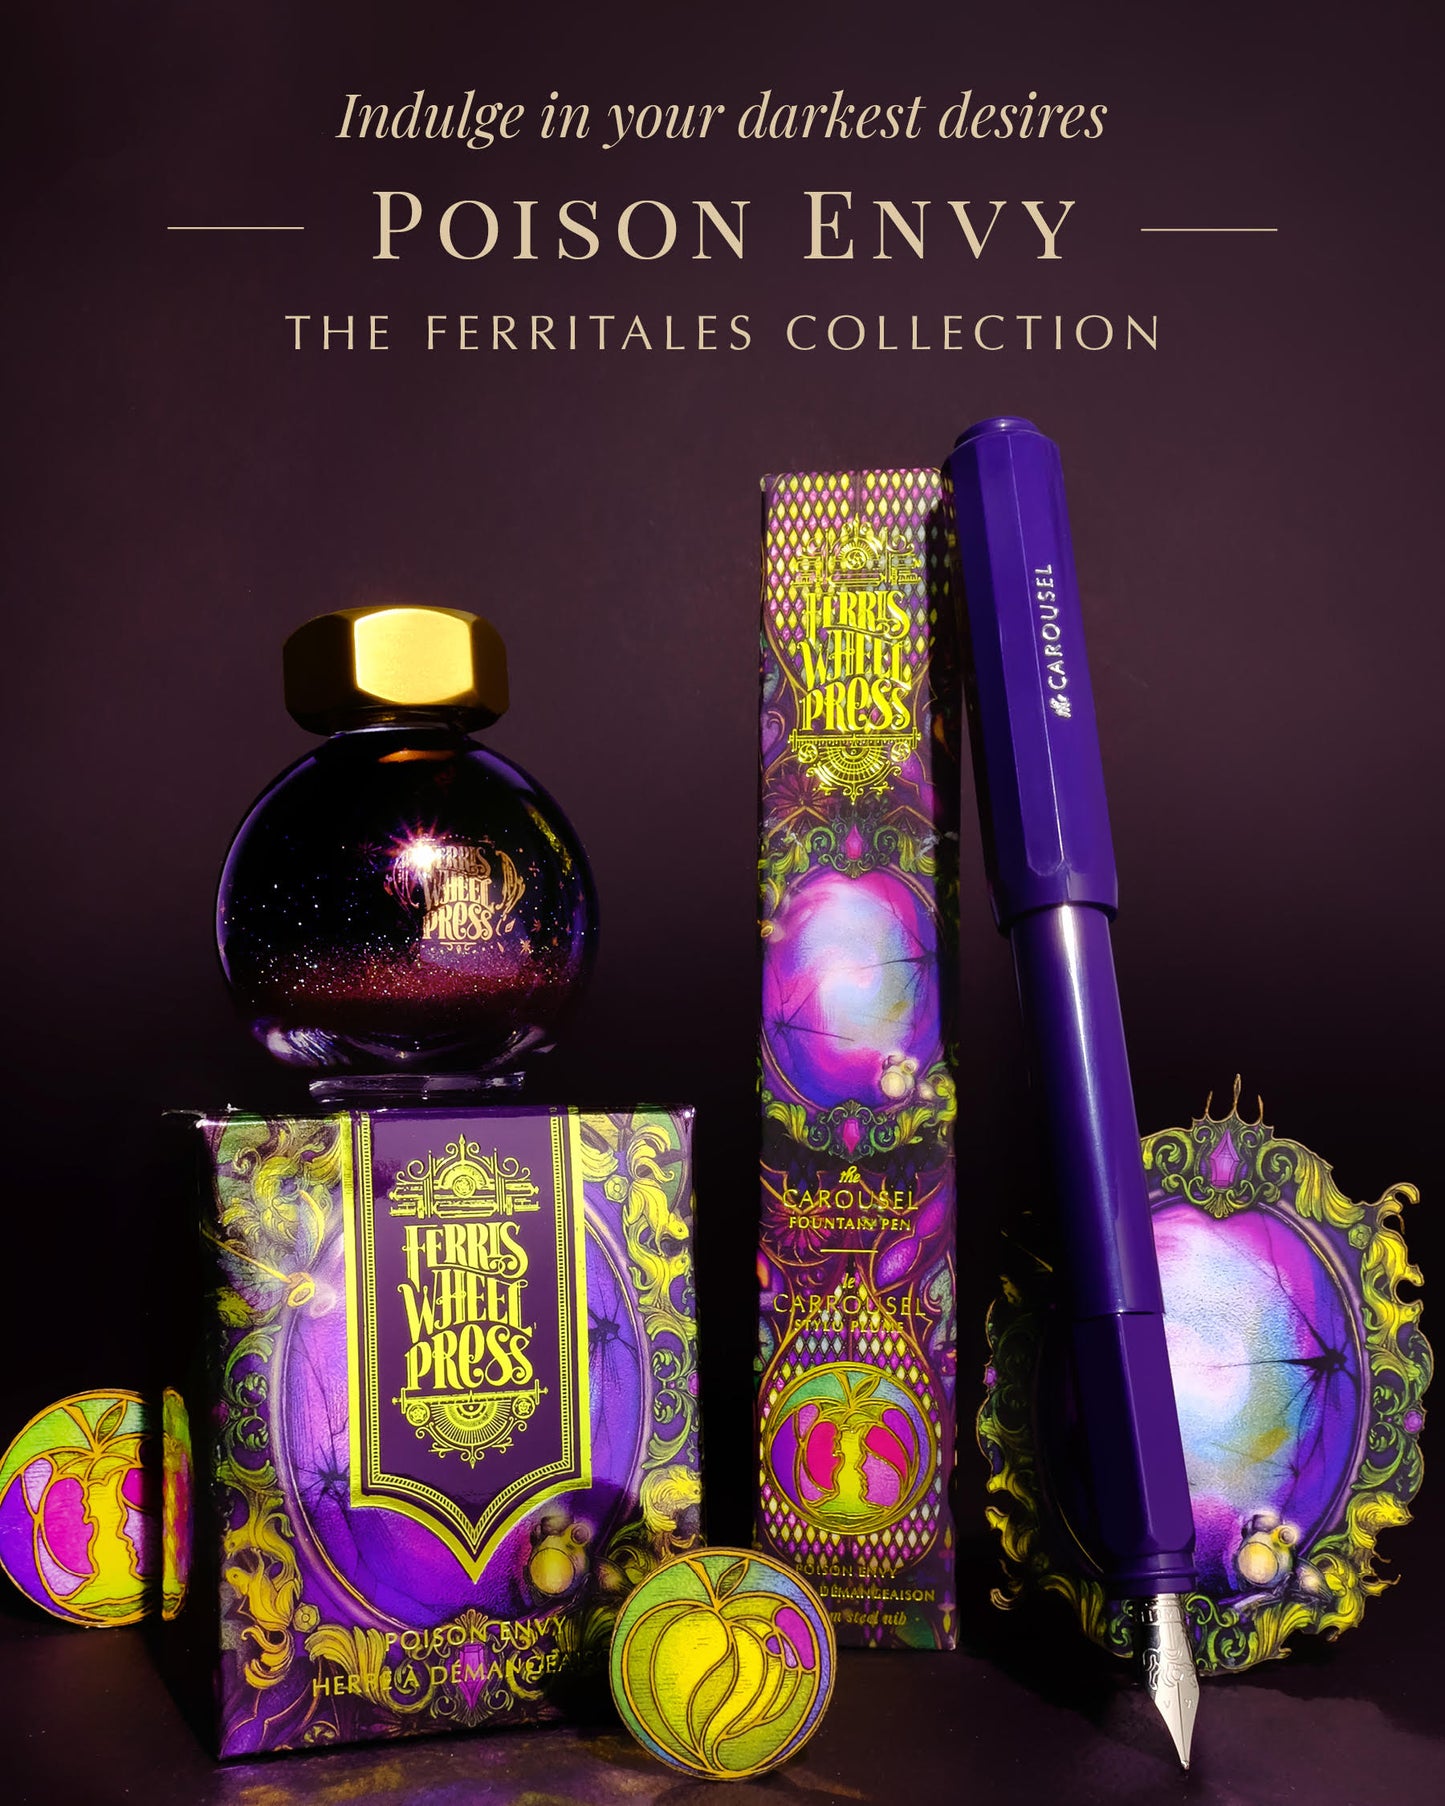 Ferris Wheel Press - Poison Envy Limited Edition - The Carousel Fountain Pen